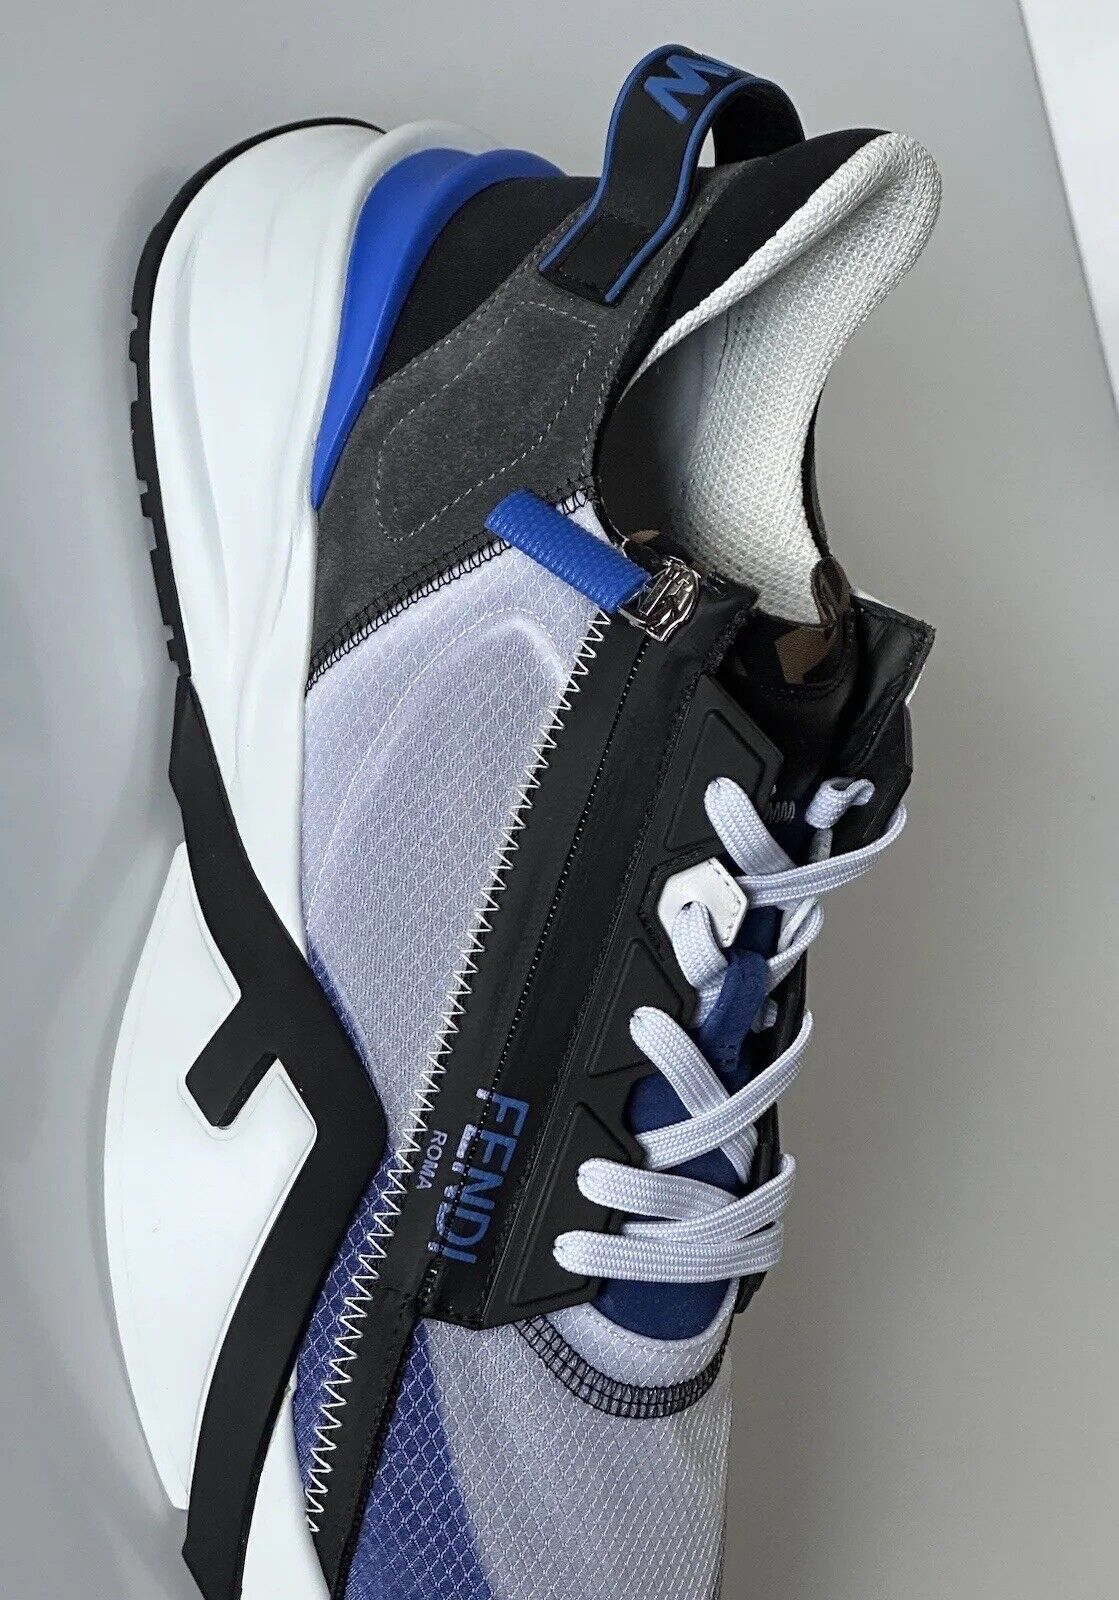 NIB Мужские кроссовки Fendi Flow из кожи/ткани, 870 долларов США, синие 12 США (45 евро) 7E1392 IT